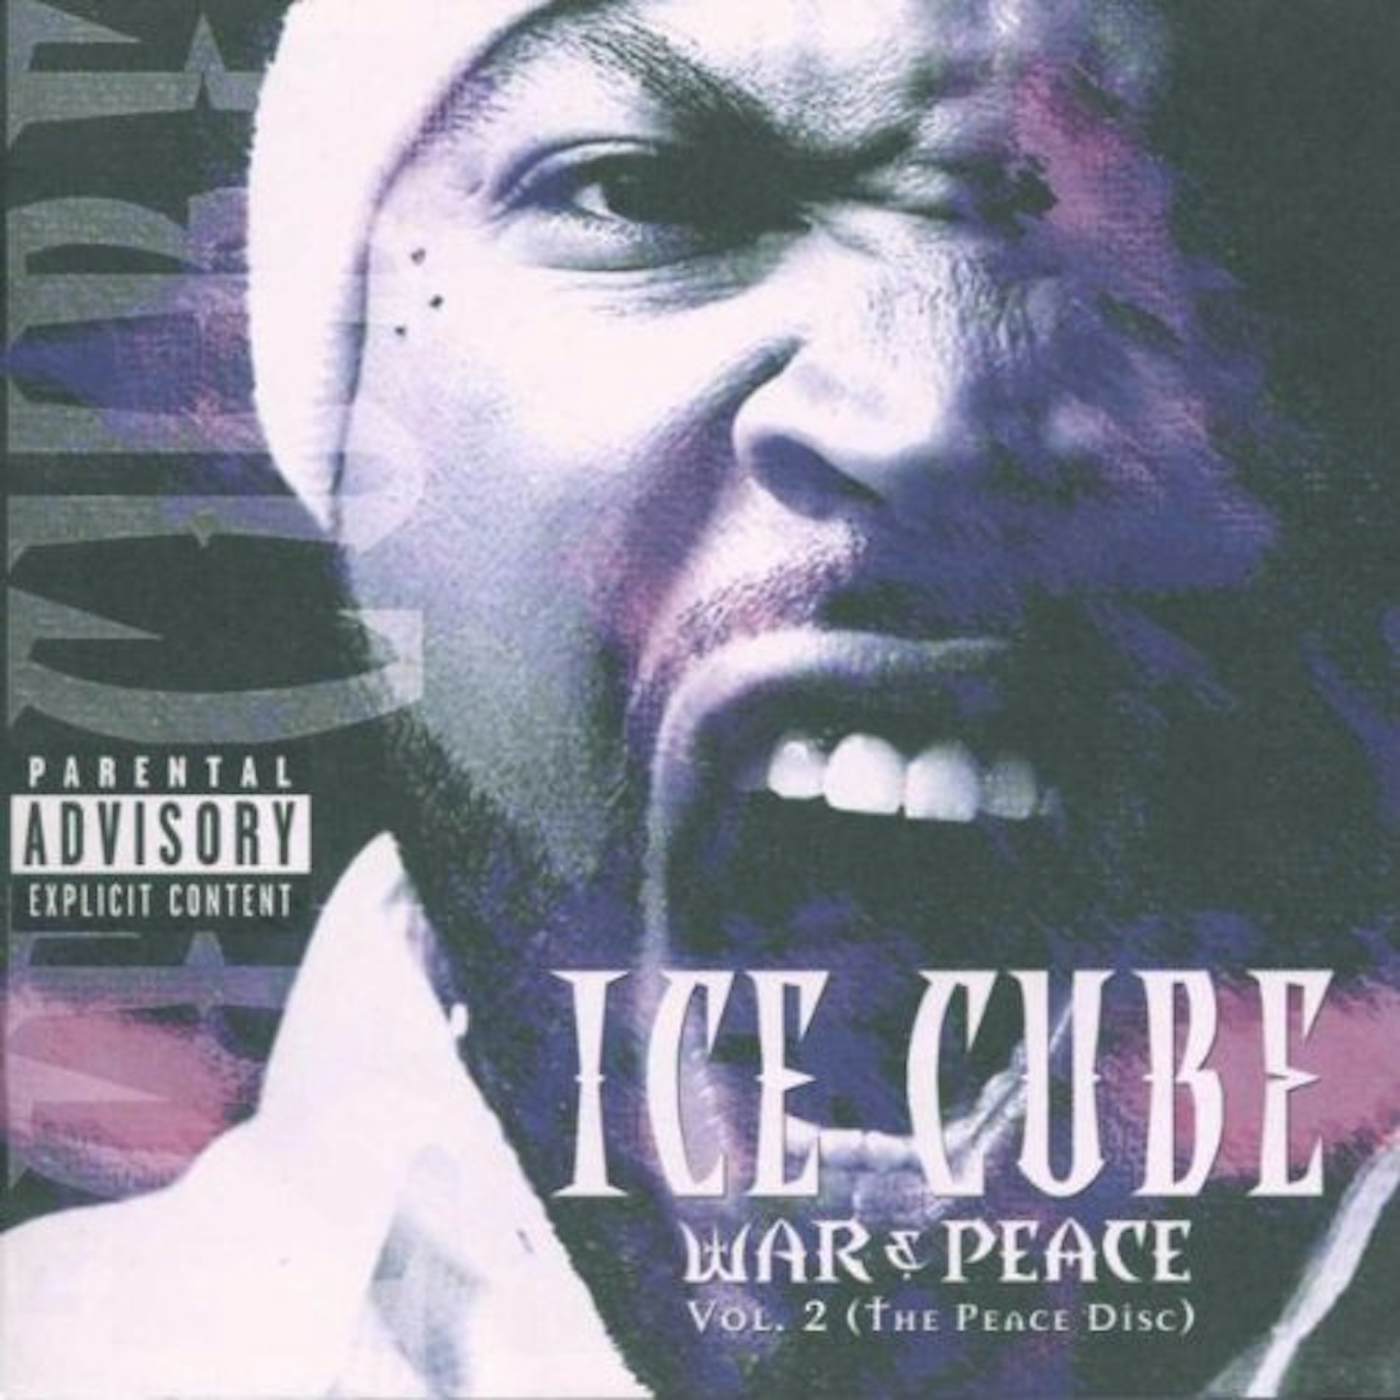 Ice Cube VOL. 2-WAR & PEACE CD